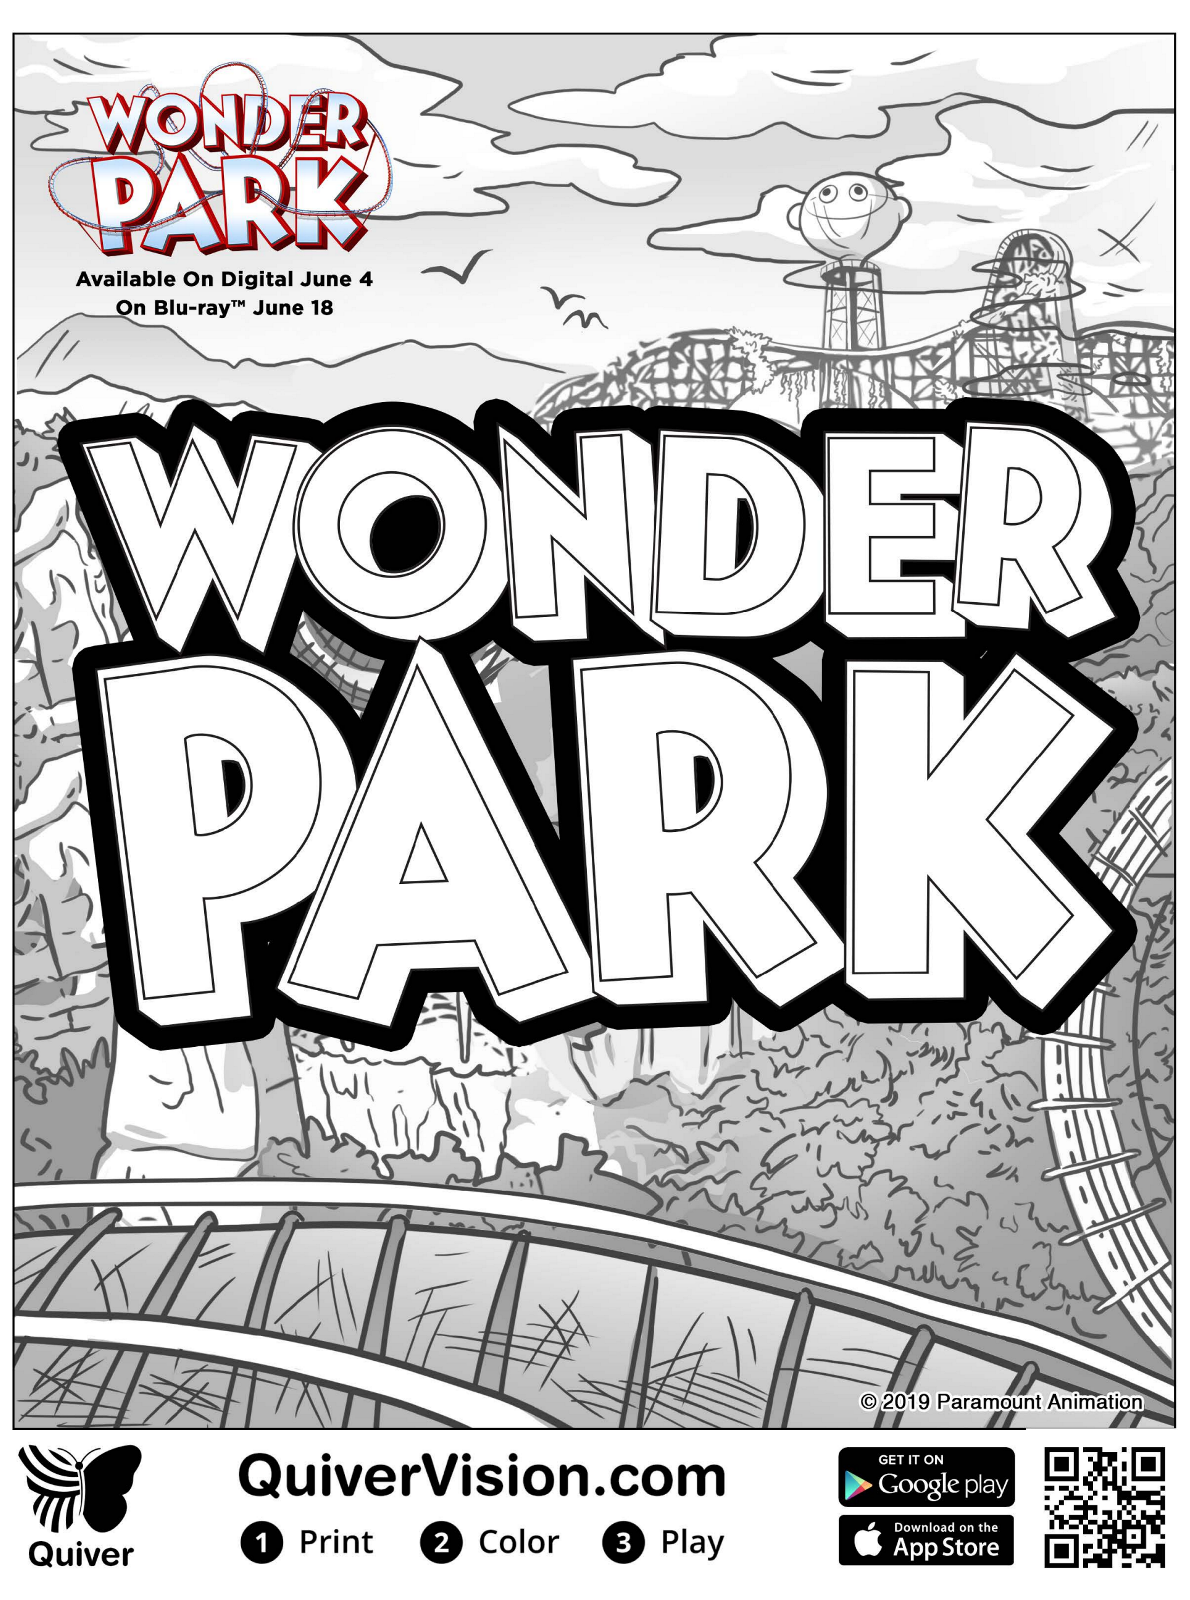 Kids-n-fun.com | Coloring page Quiver wonderpark